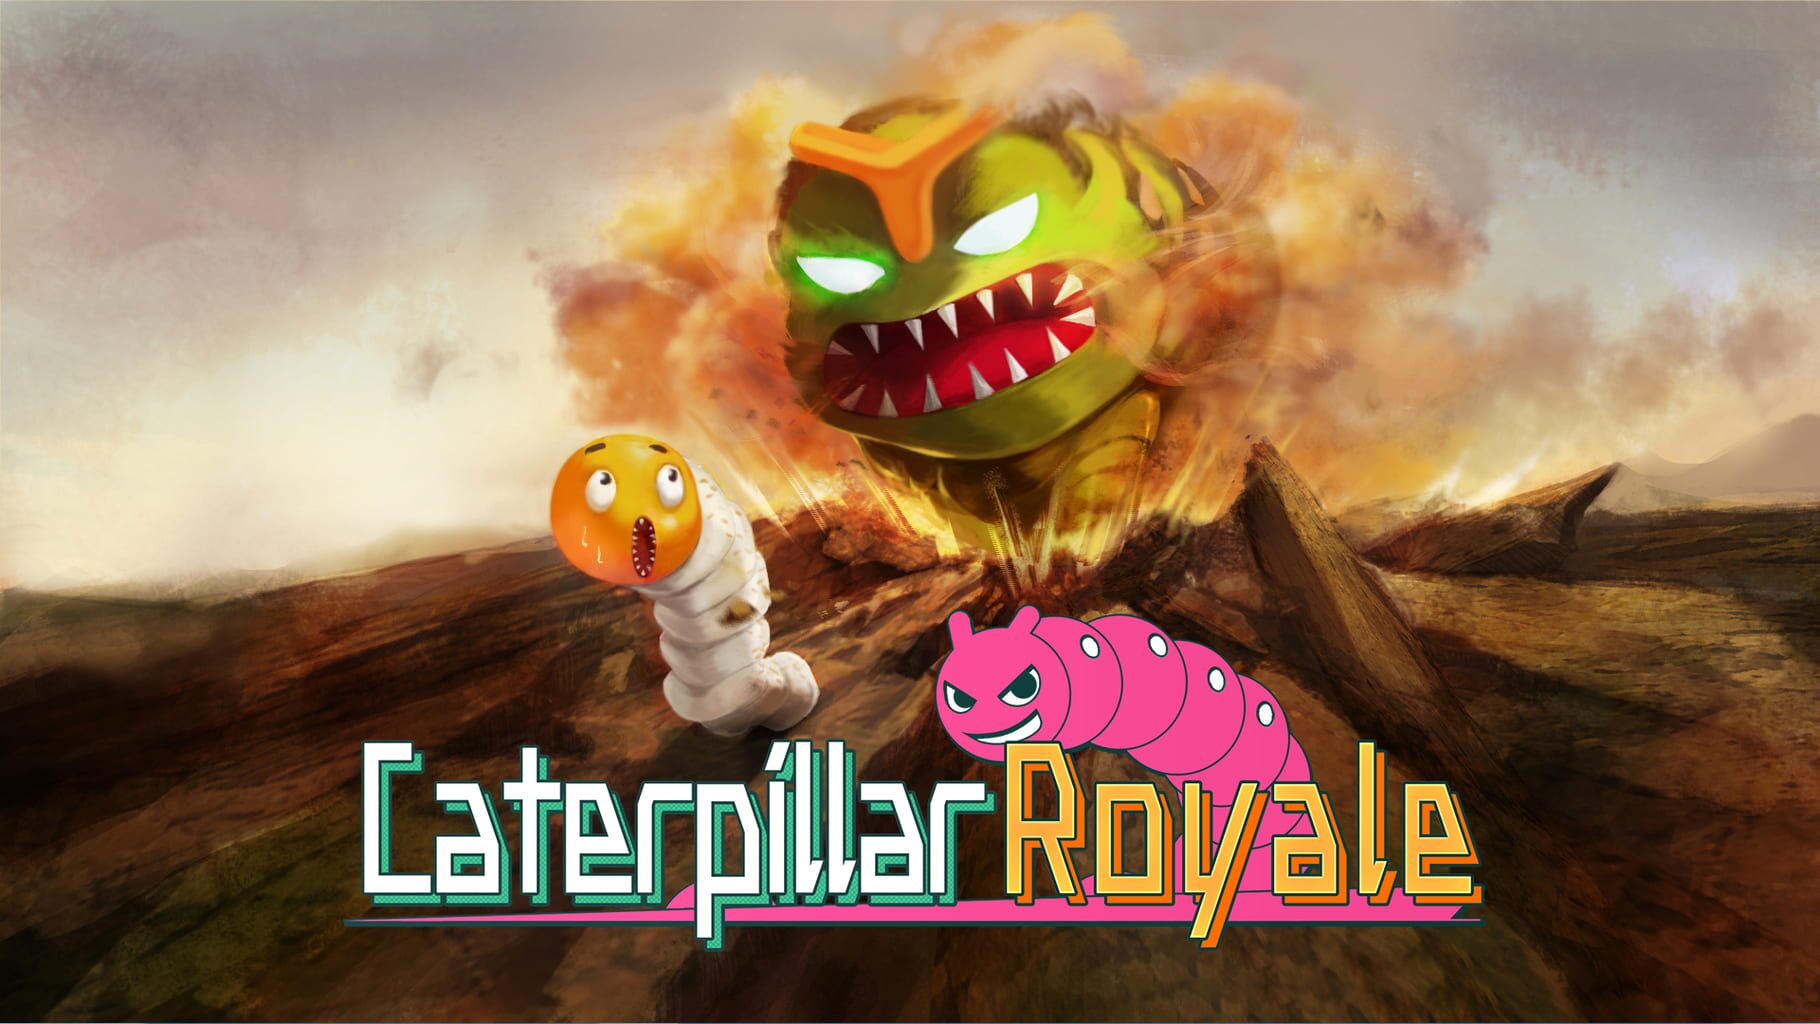 Caterpillar Royale artwork